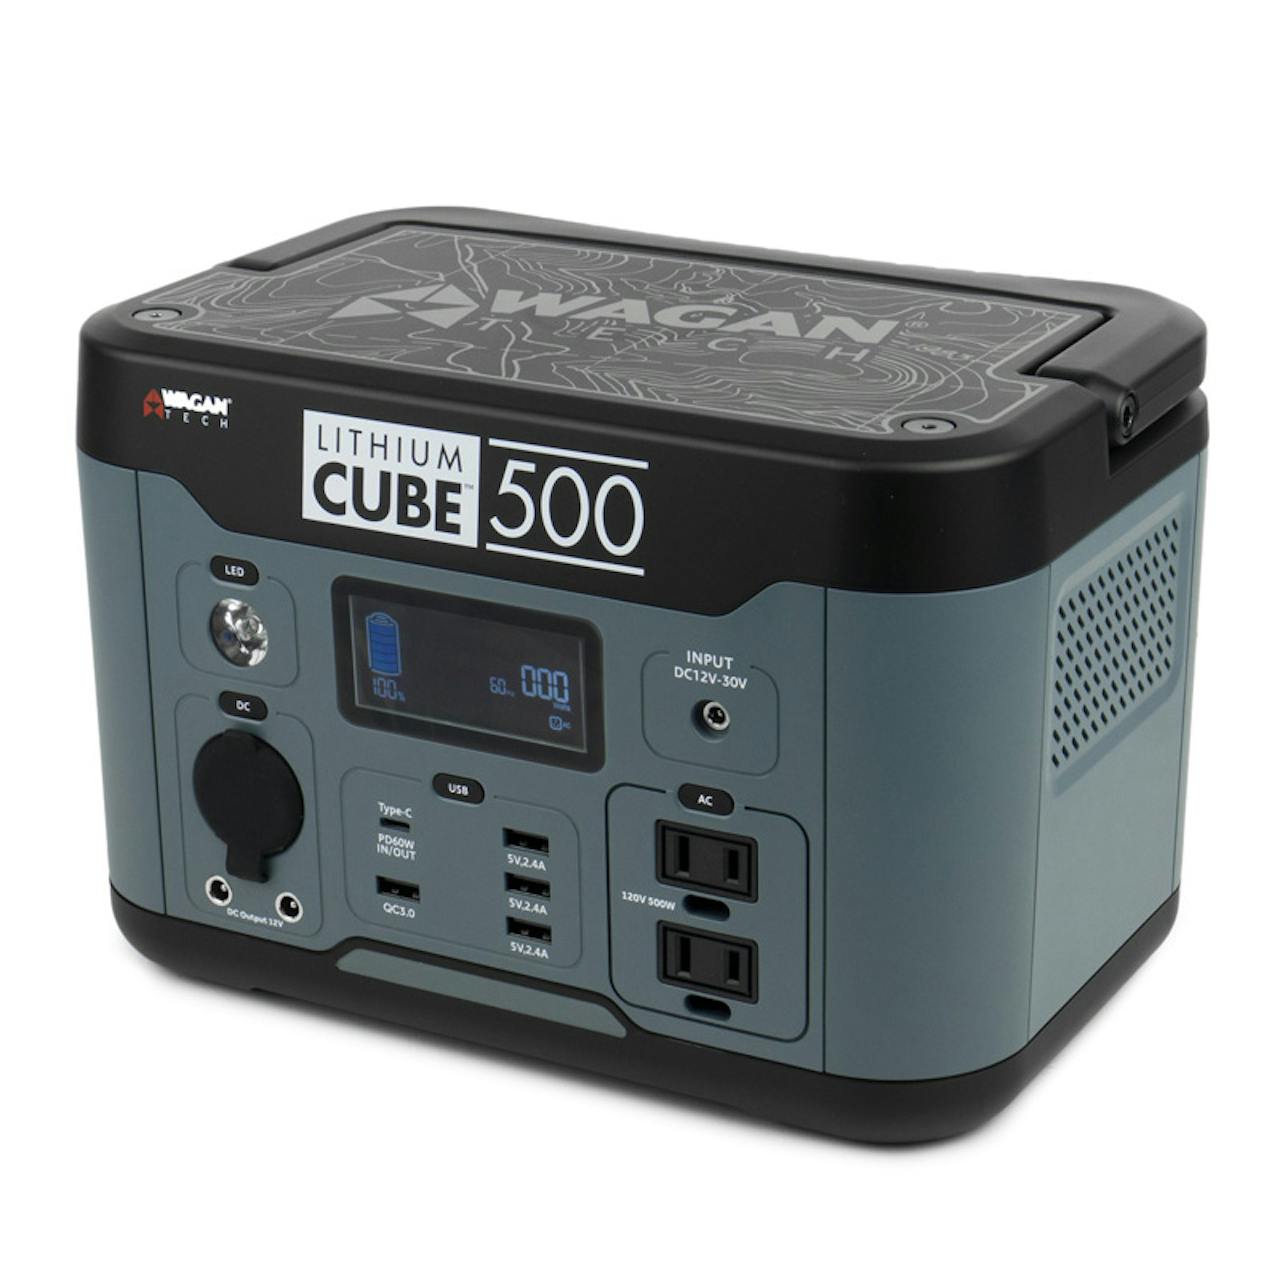 Cube 500